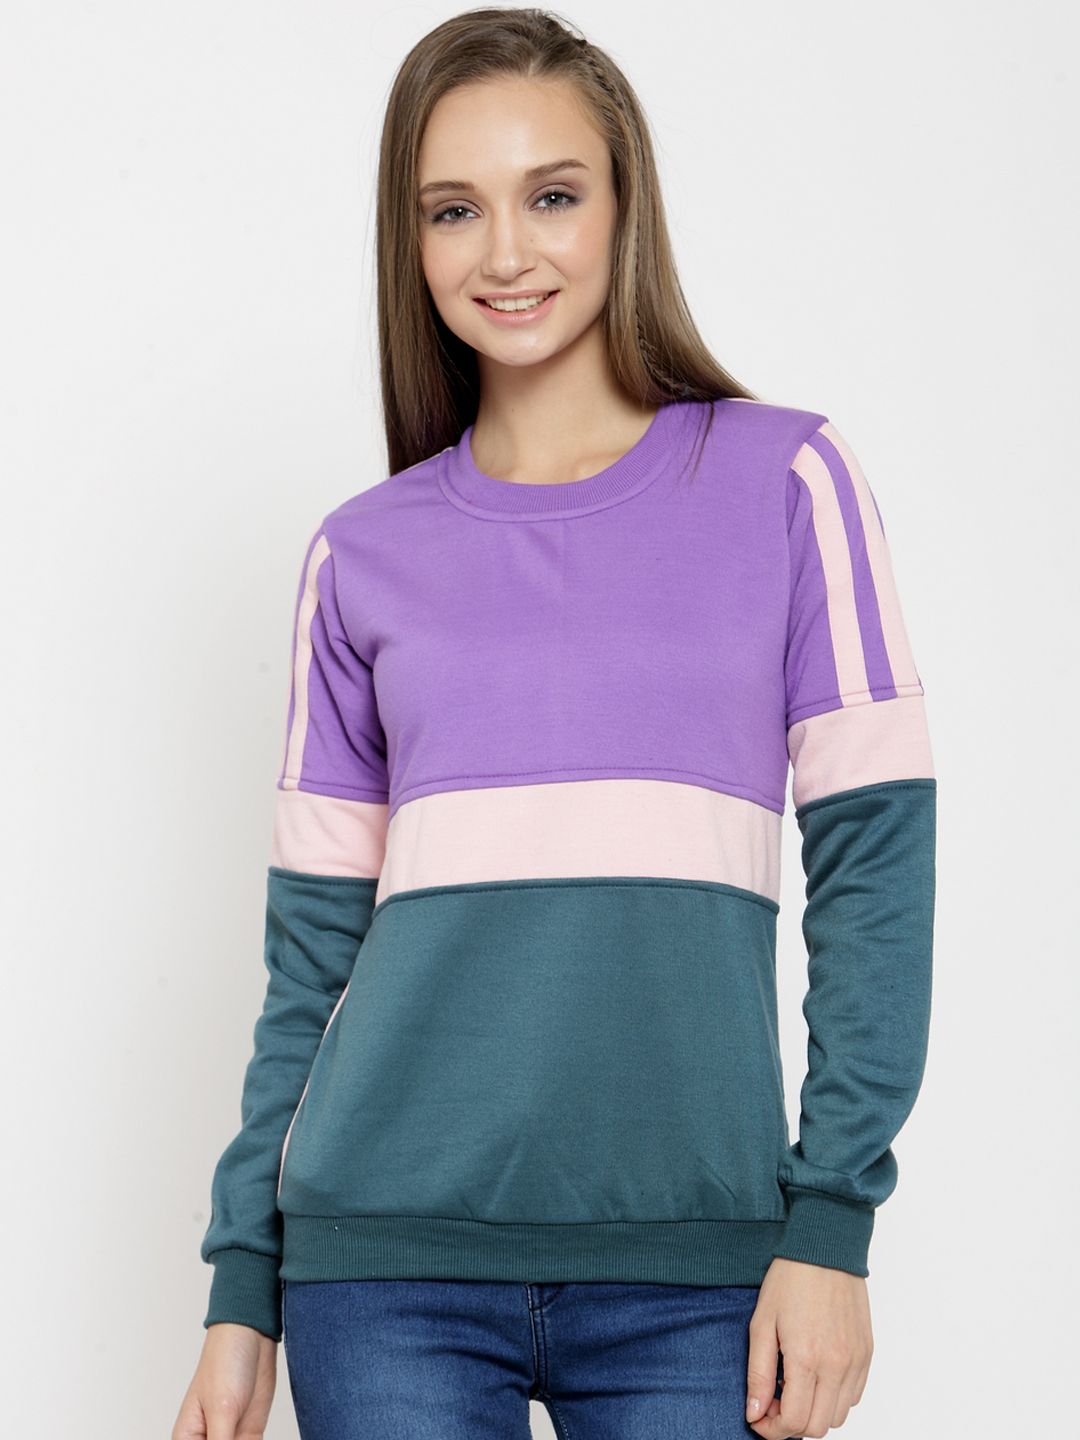 Belle Fille Women Purple & Teal Colourblocked Sweatshirt Price in India